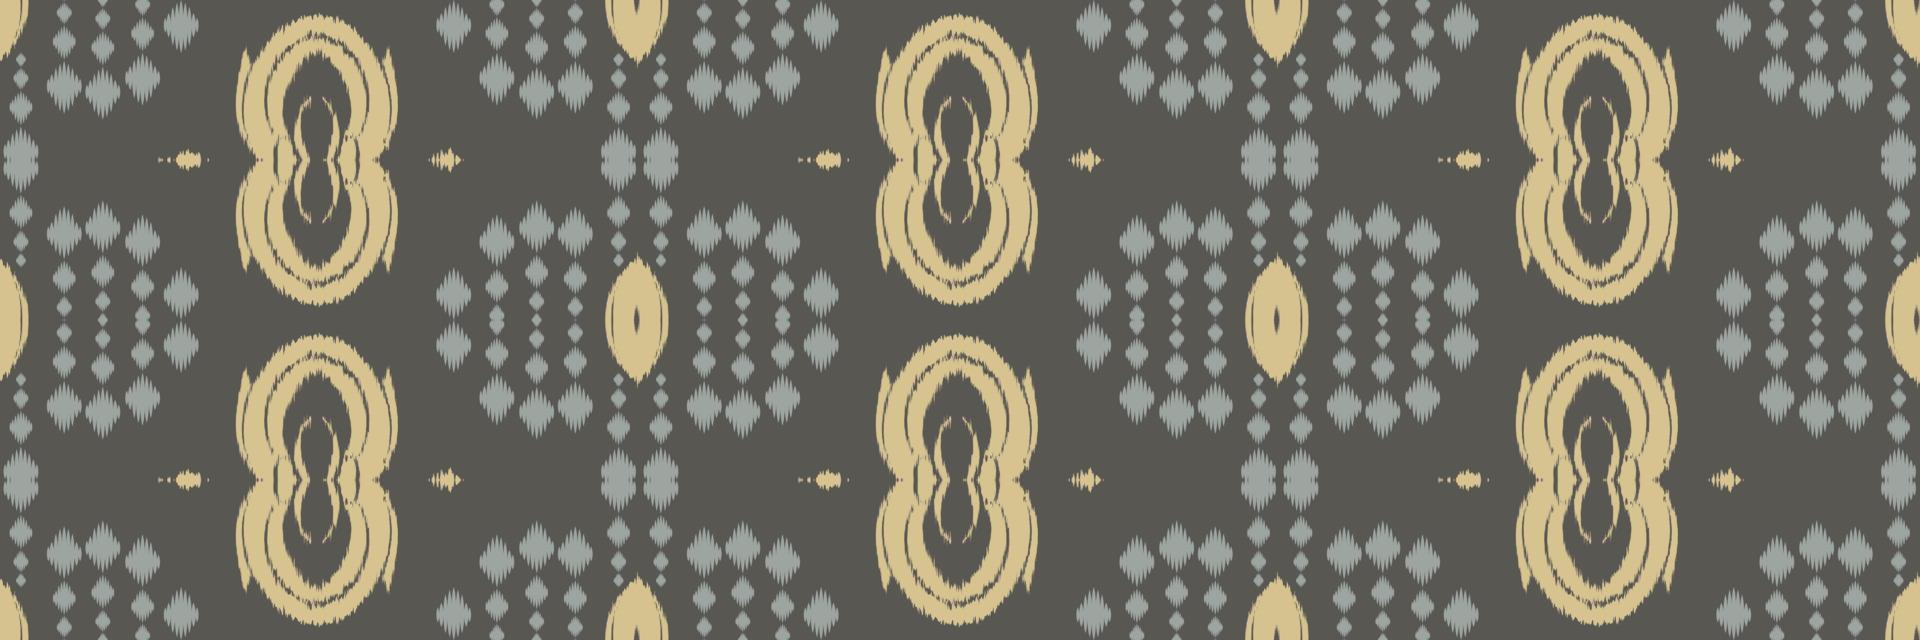 Batik-Textil-Ikat oder Ikat-Rahmen, nahtloses Muster, digitales Vektordesign für den Druck, Saree, Kurti, Borneo, Stoffrand, Pinsel, Symbole, Muster, Baumwolle vektor